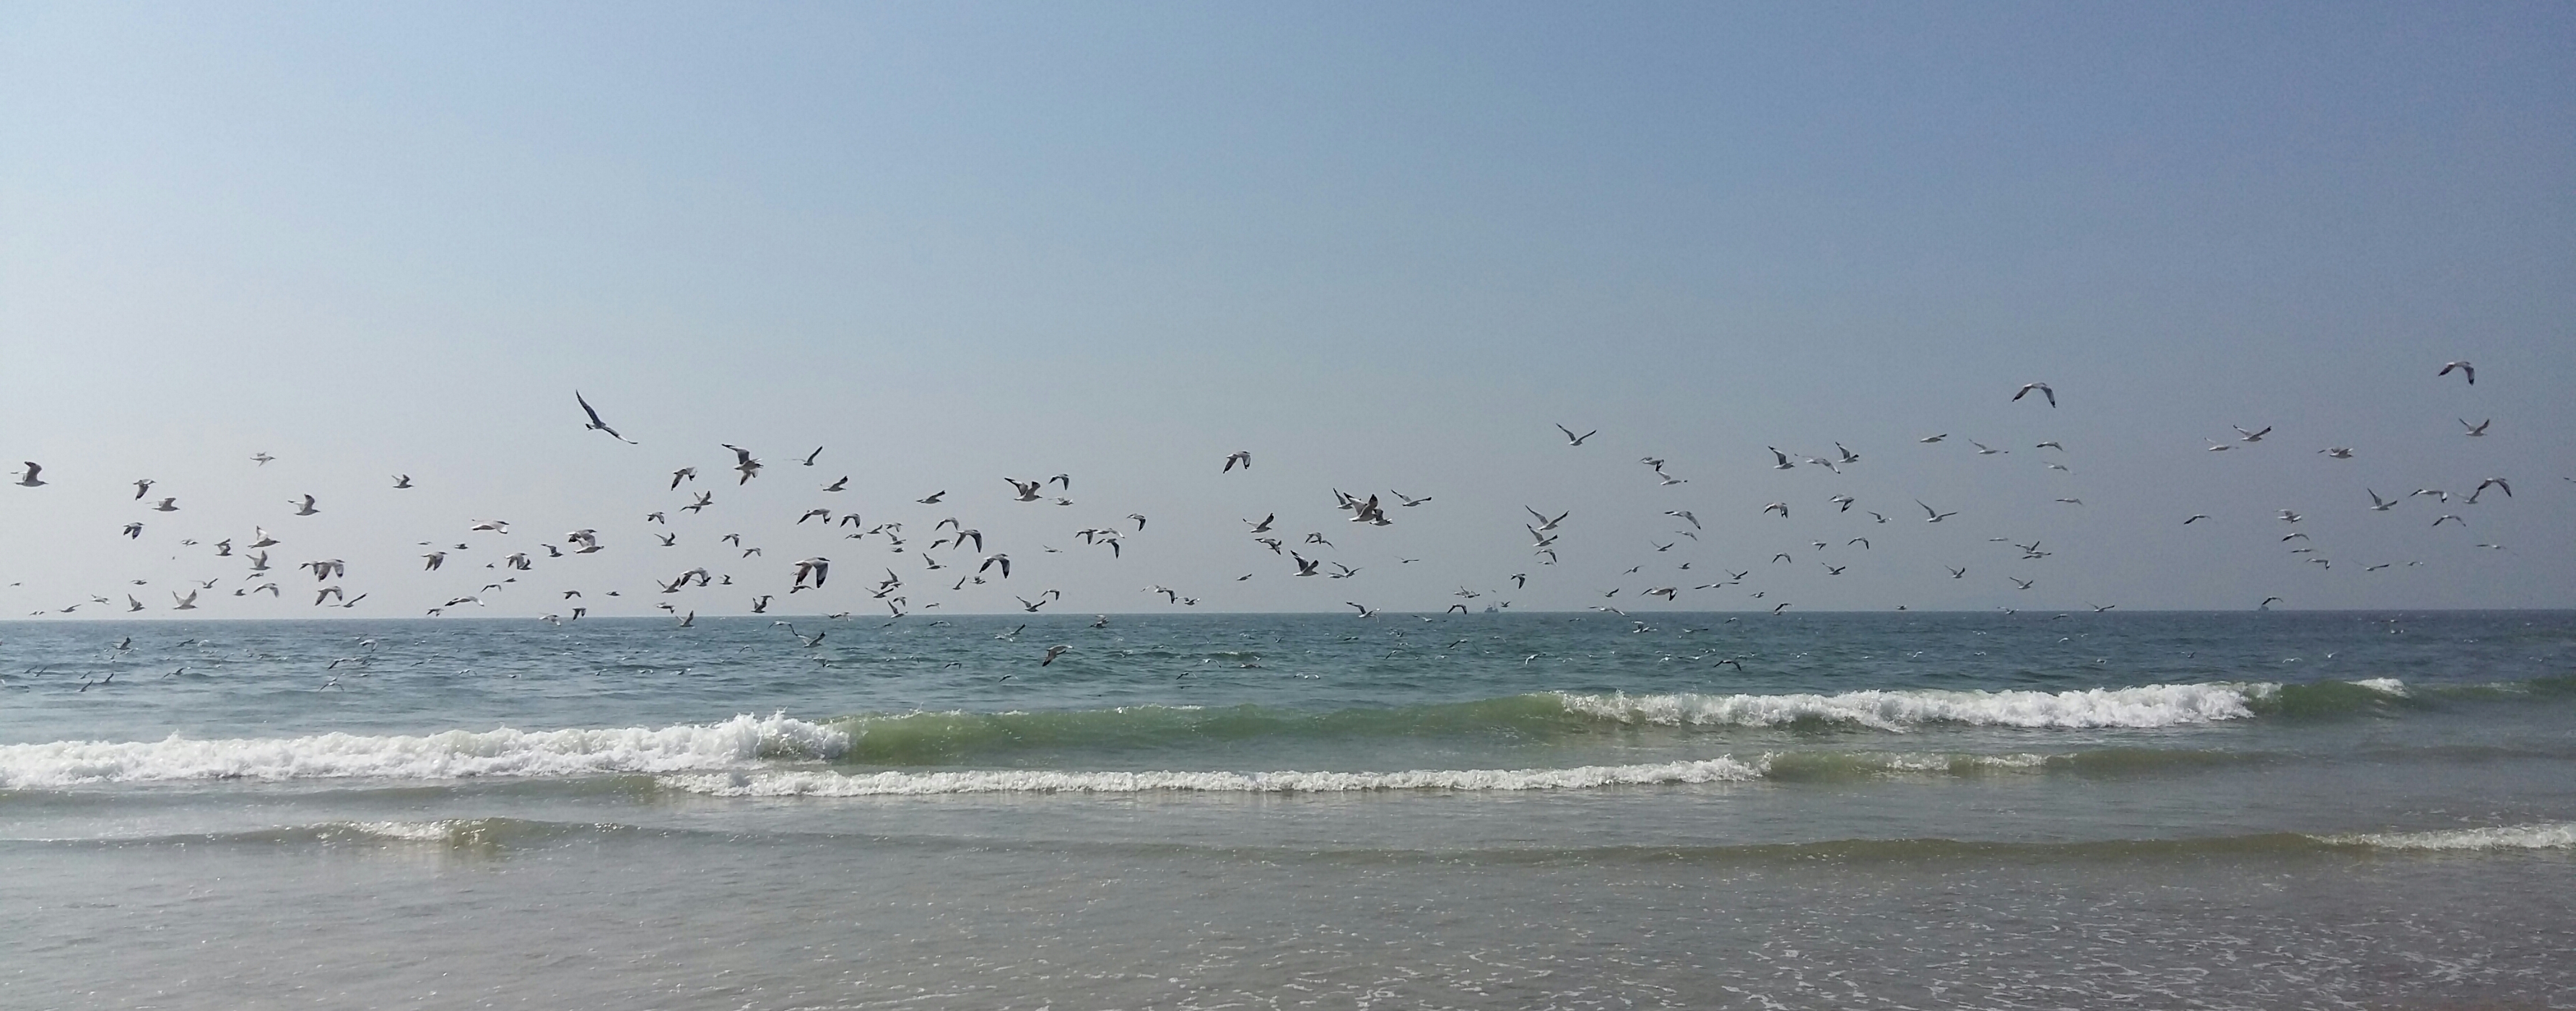 File:Arossim beach with full of birds.jpg - Wikimedia Commons